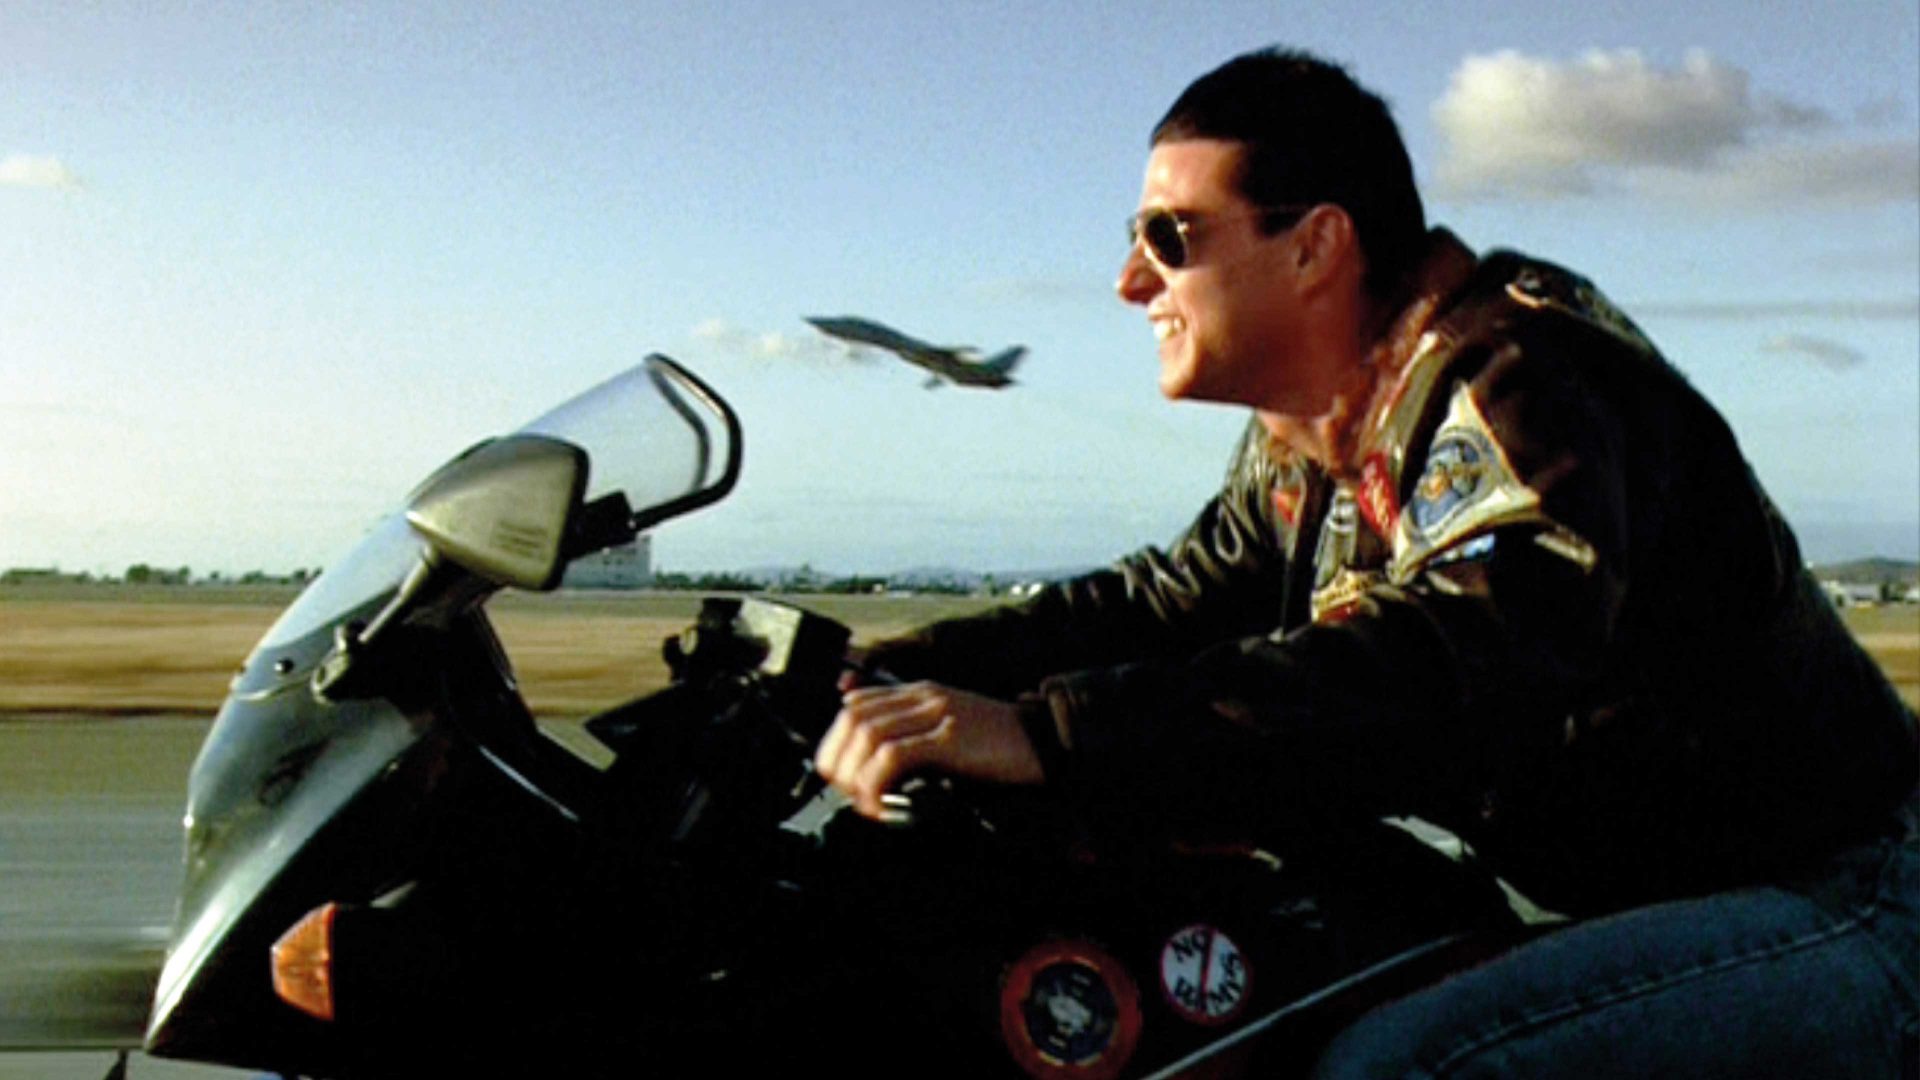 Tom Cruise as Maverick in the original Top Gun movie. Photo: Paramount Pictures/
Sunset Boulevard